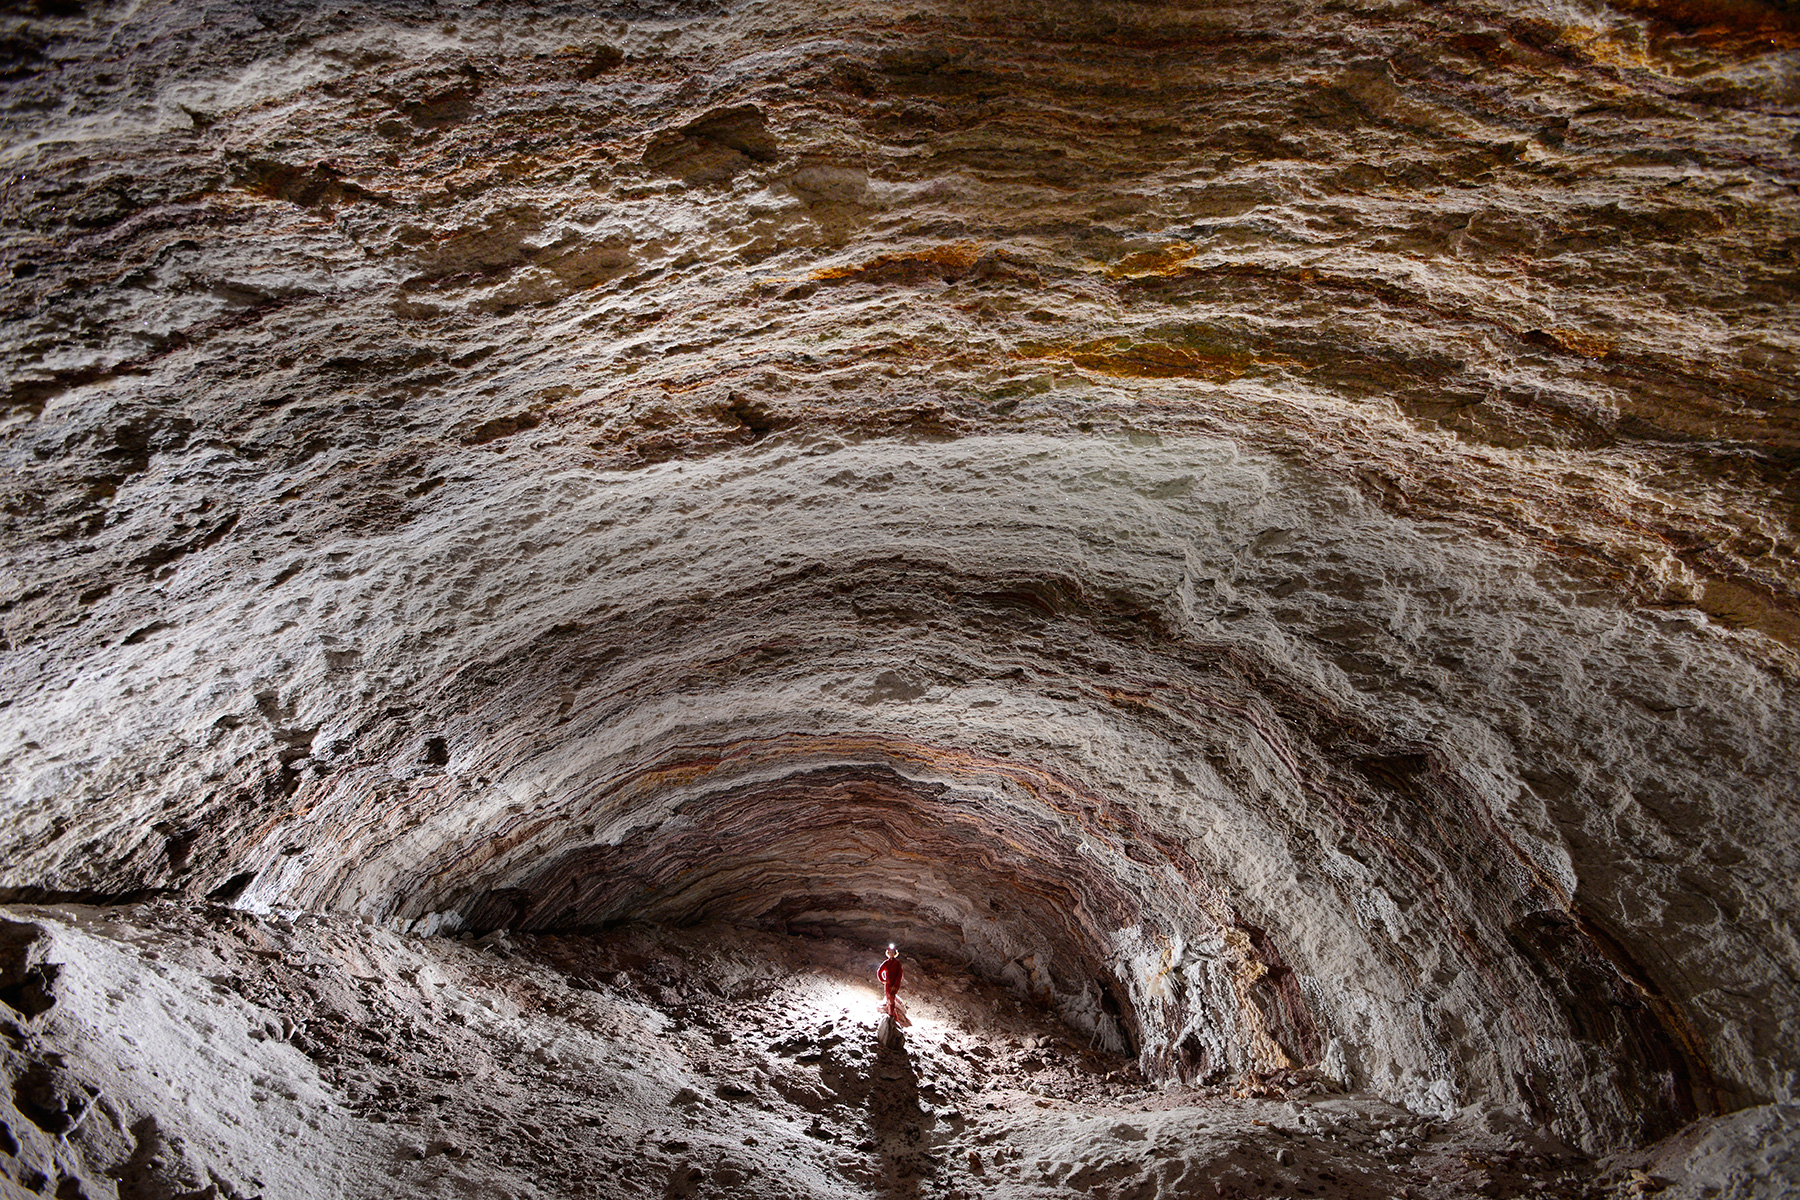 3N Cave(Namakdan, Qeshm, Iran) - Salle d'effondrement dans le sel